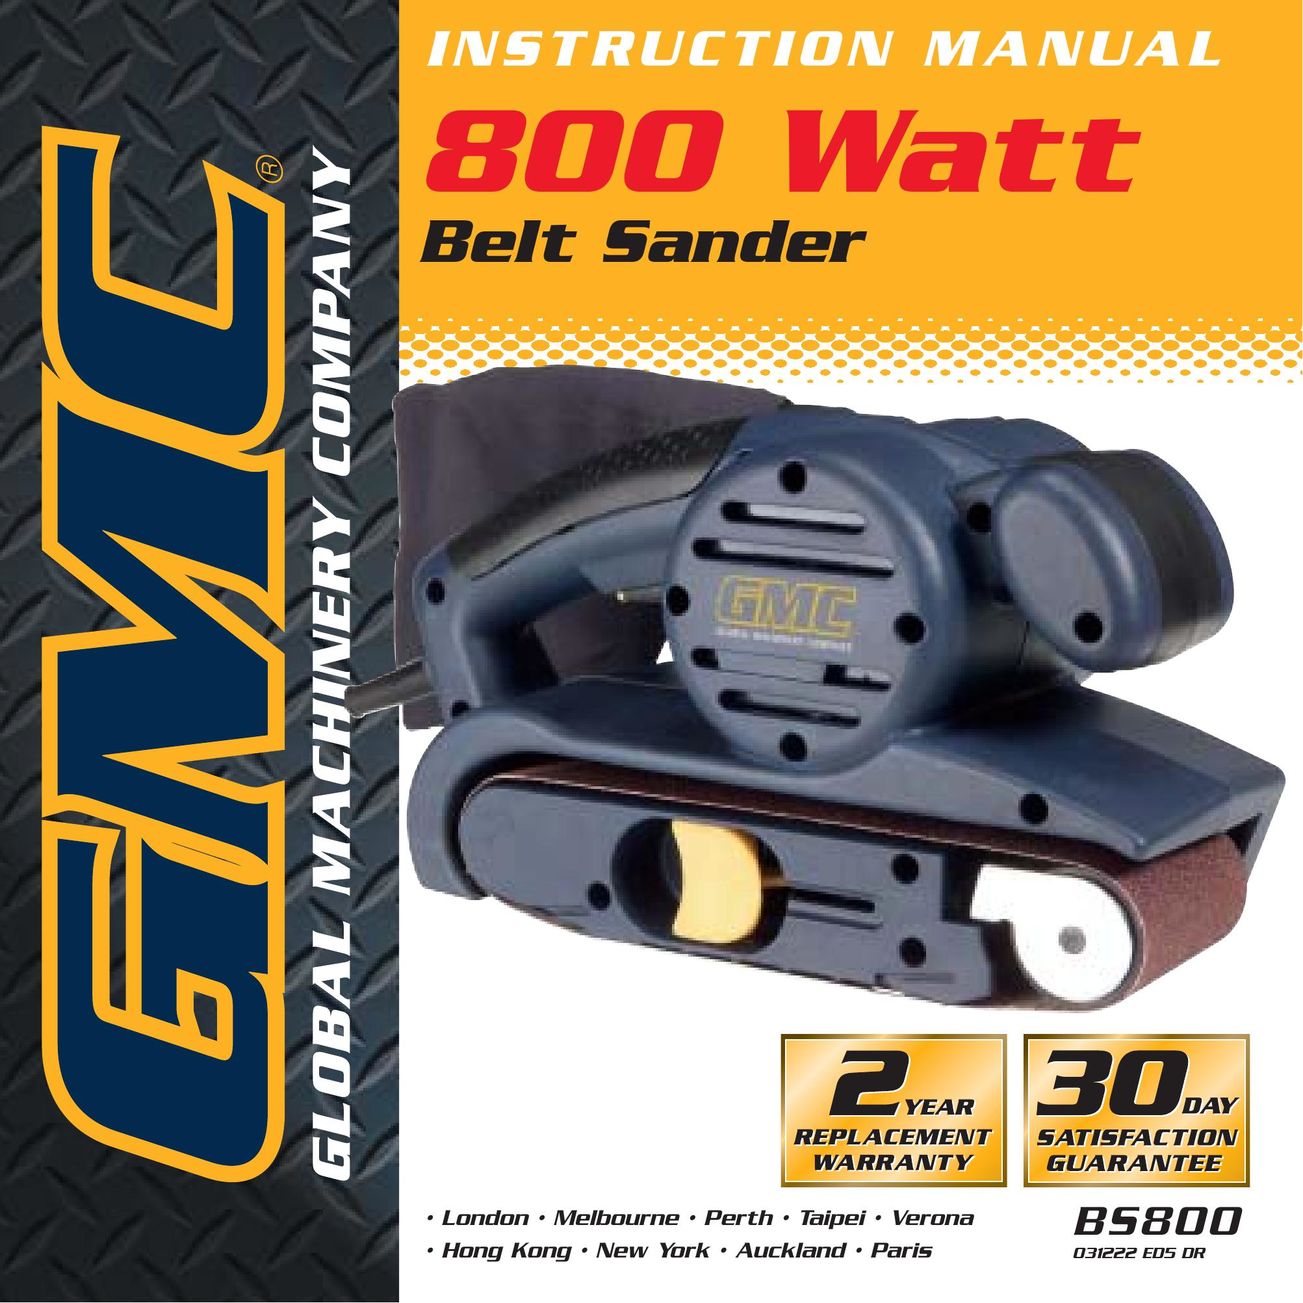 Global Machinery Company BS800 Sander User Manual